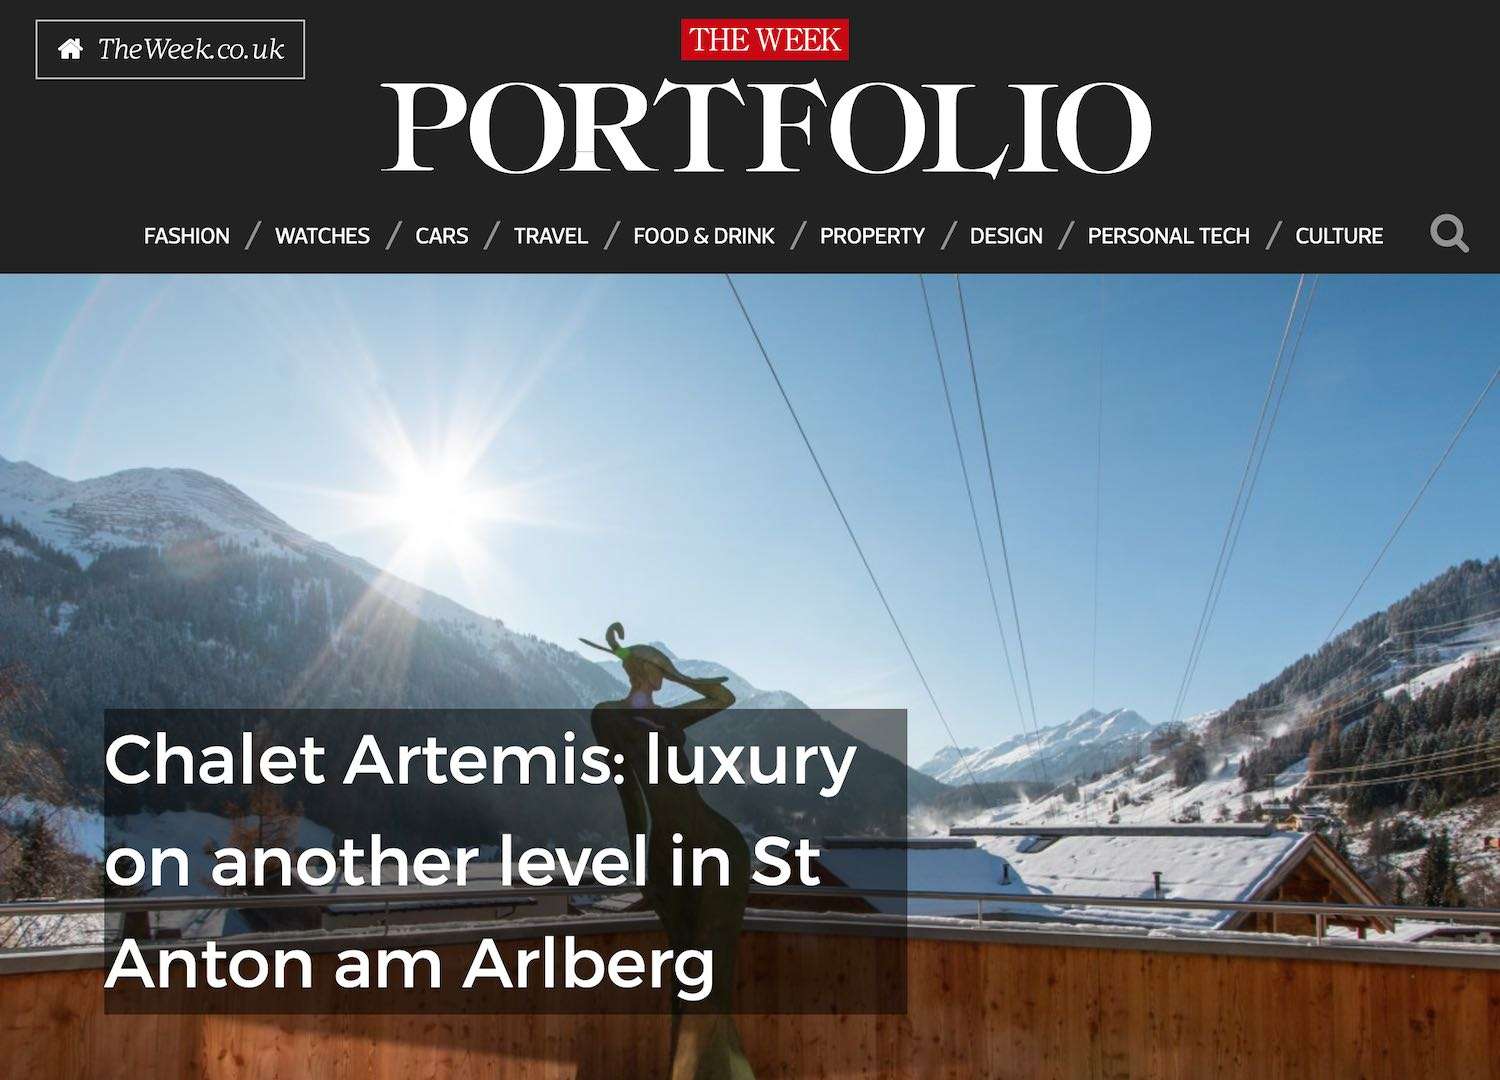 Chalet Artemis - Luxury on another level in St Anton am Arlberg - The Week Portfolio